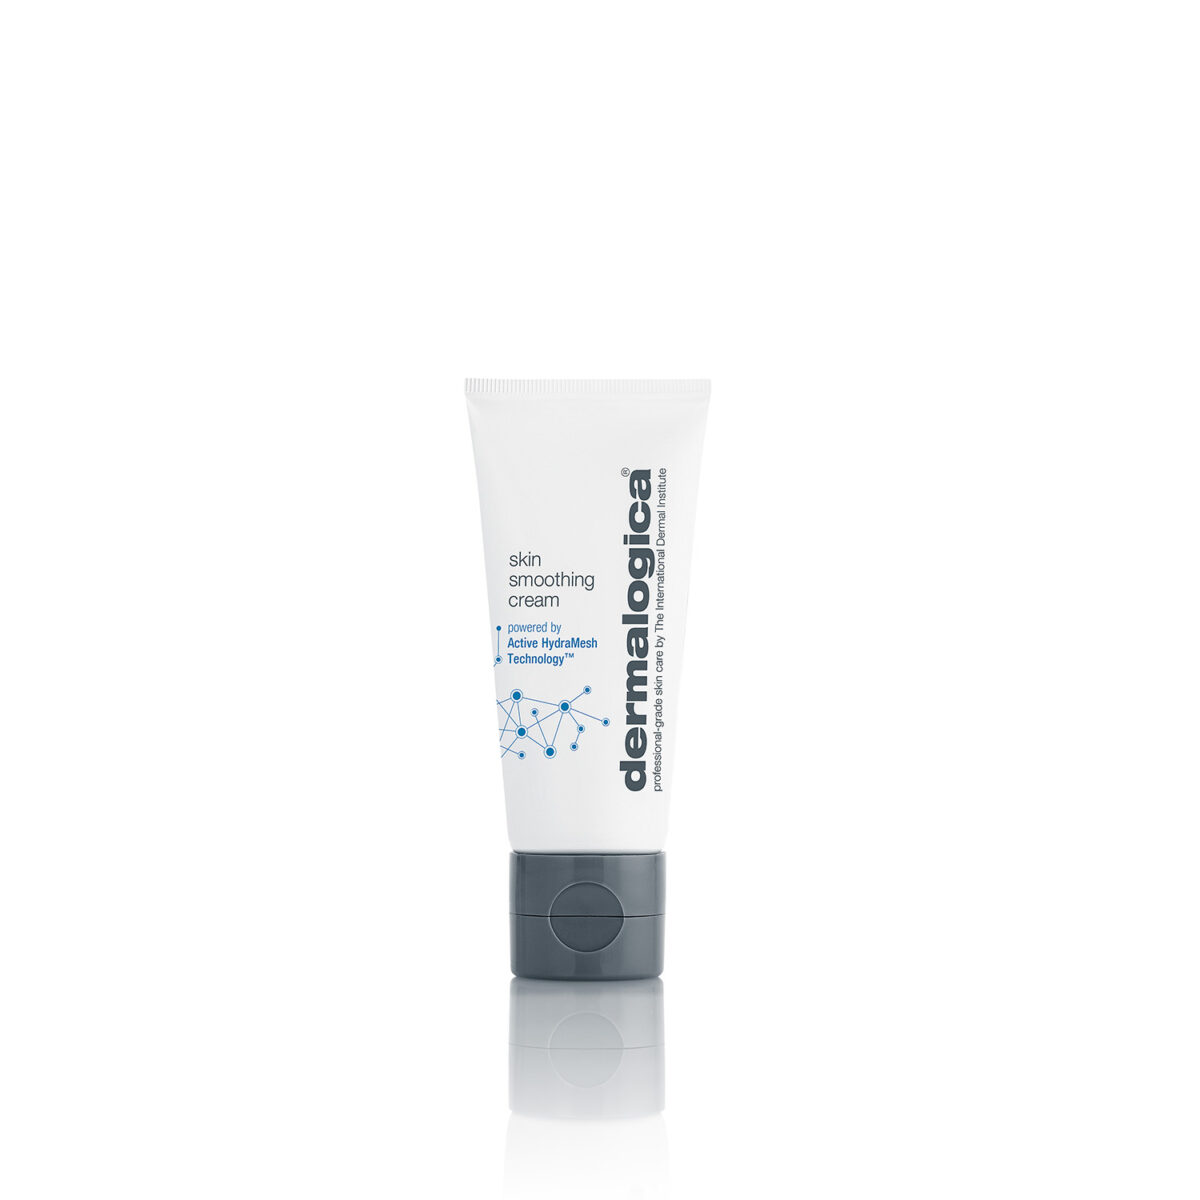 Skin Smoothing Cream - Skincare